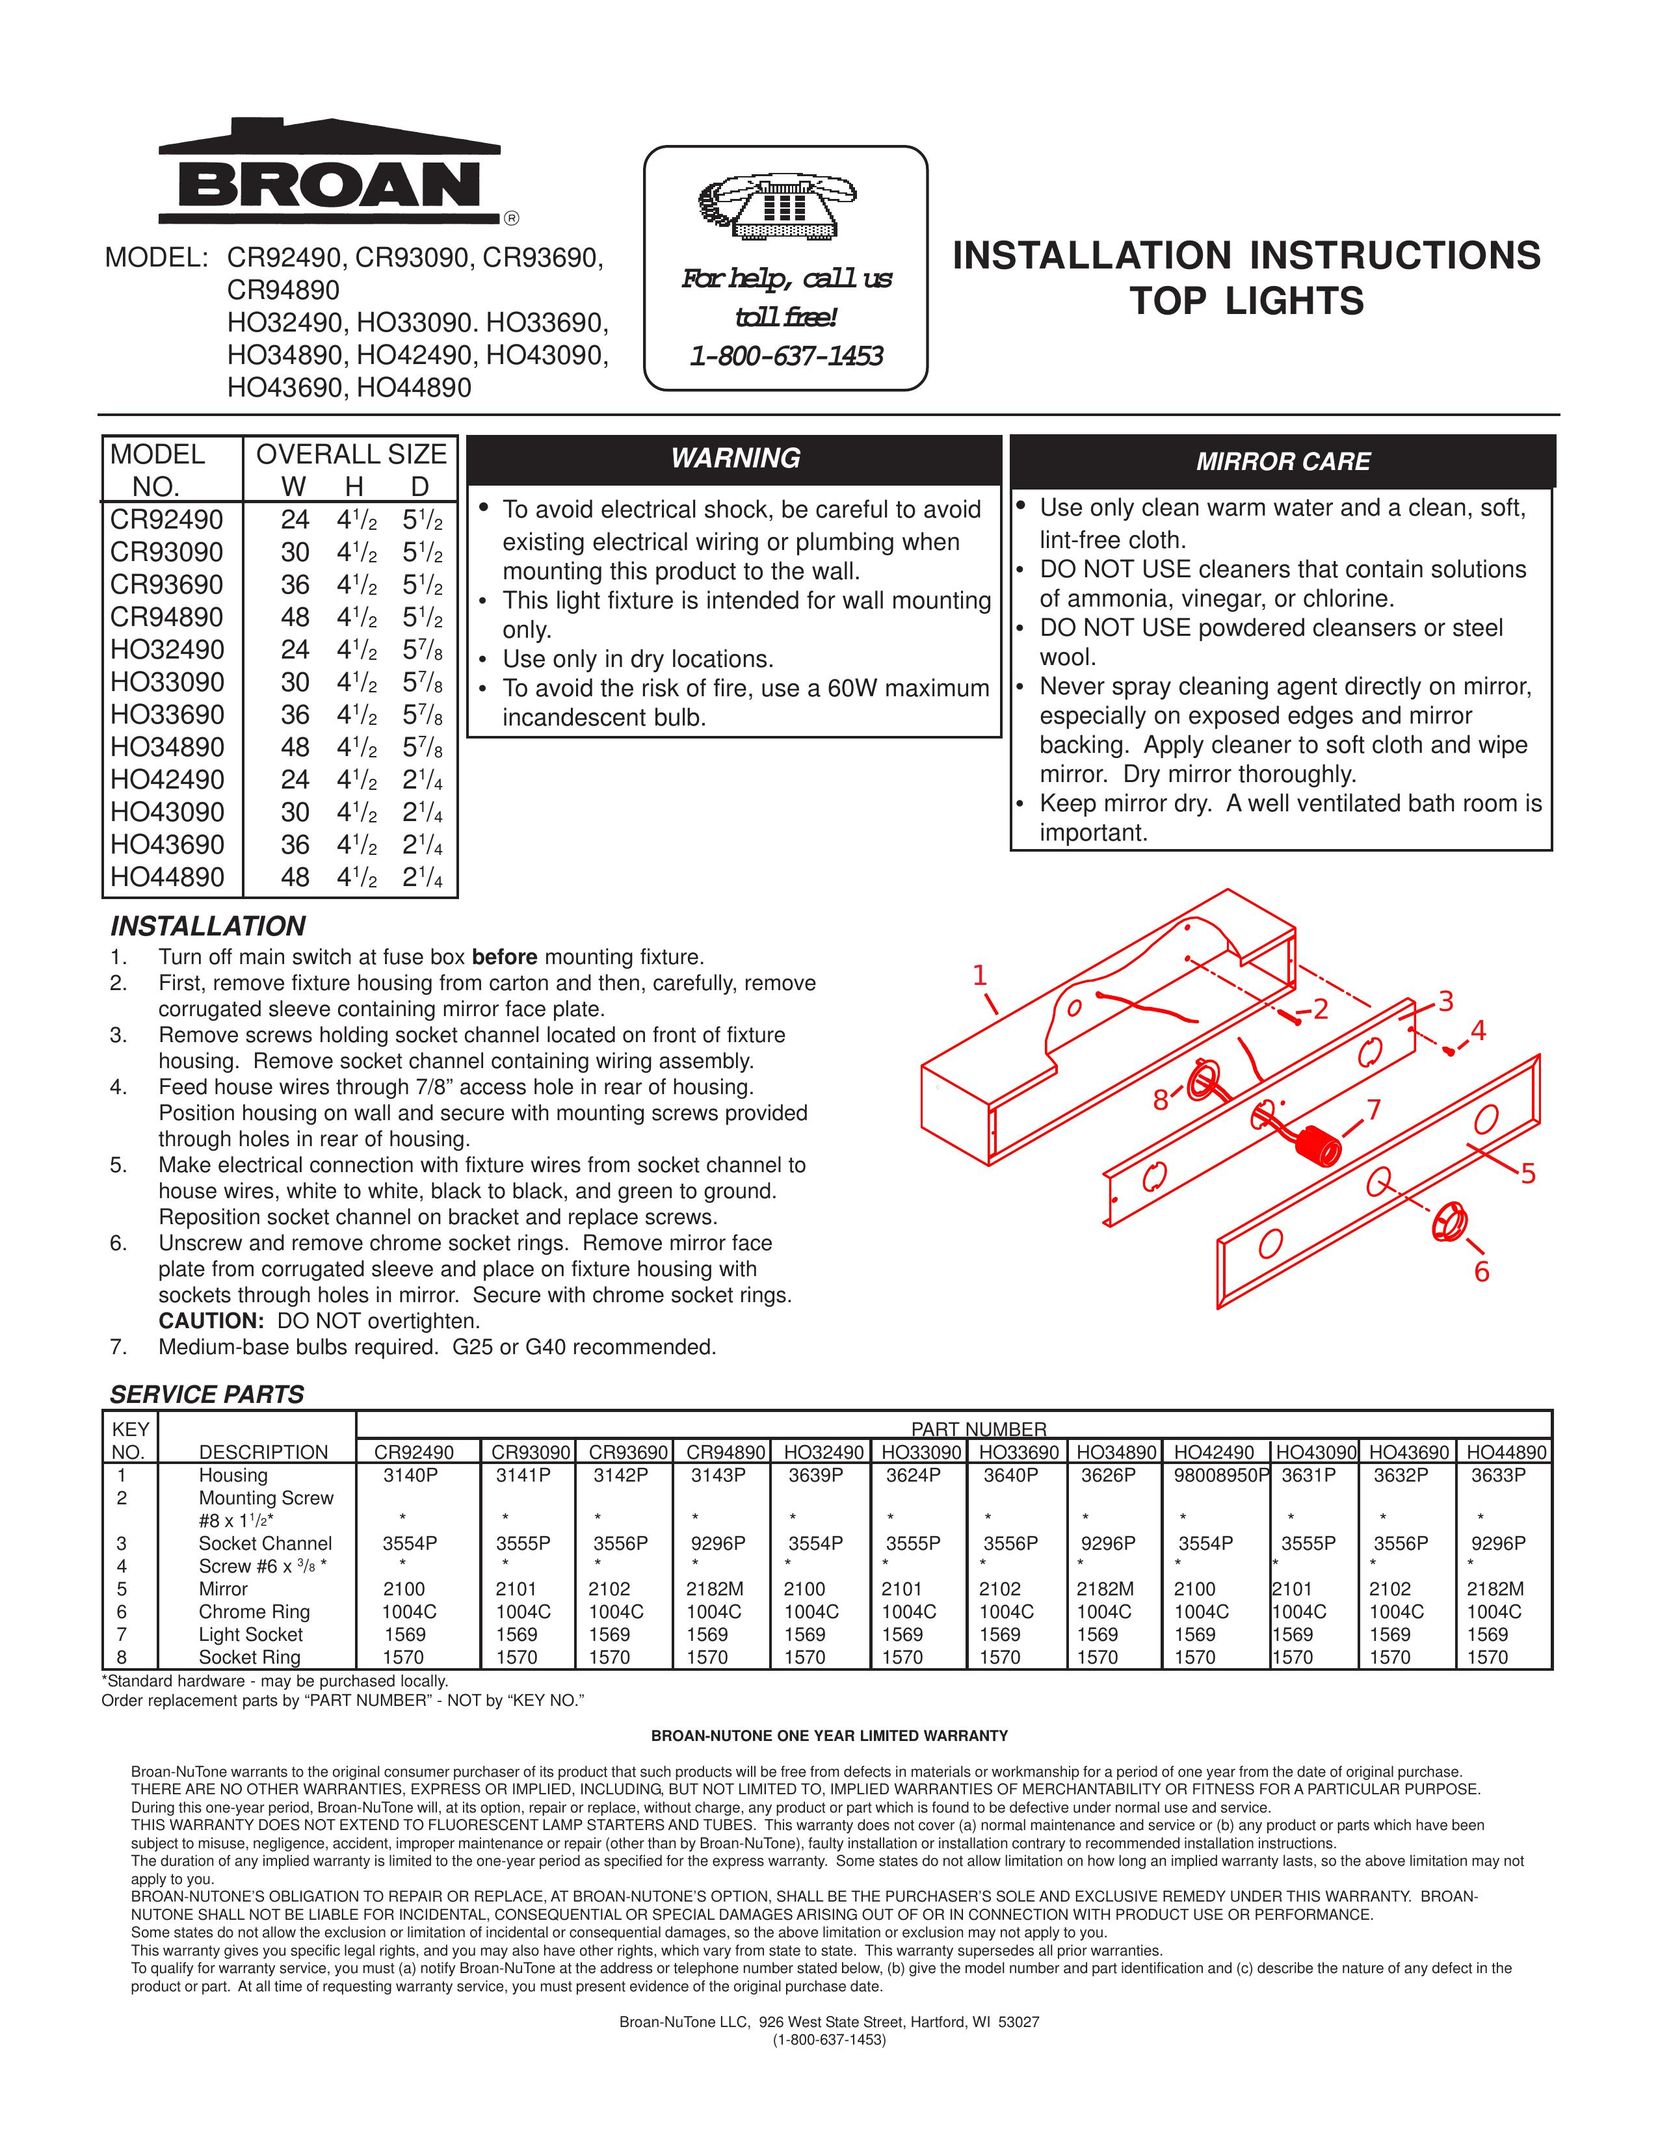 Broan CR93090 Indoor Furnishings User Manual